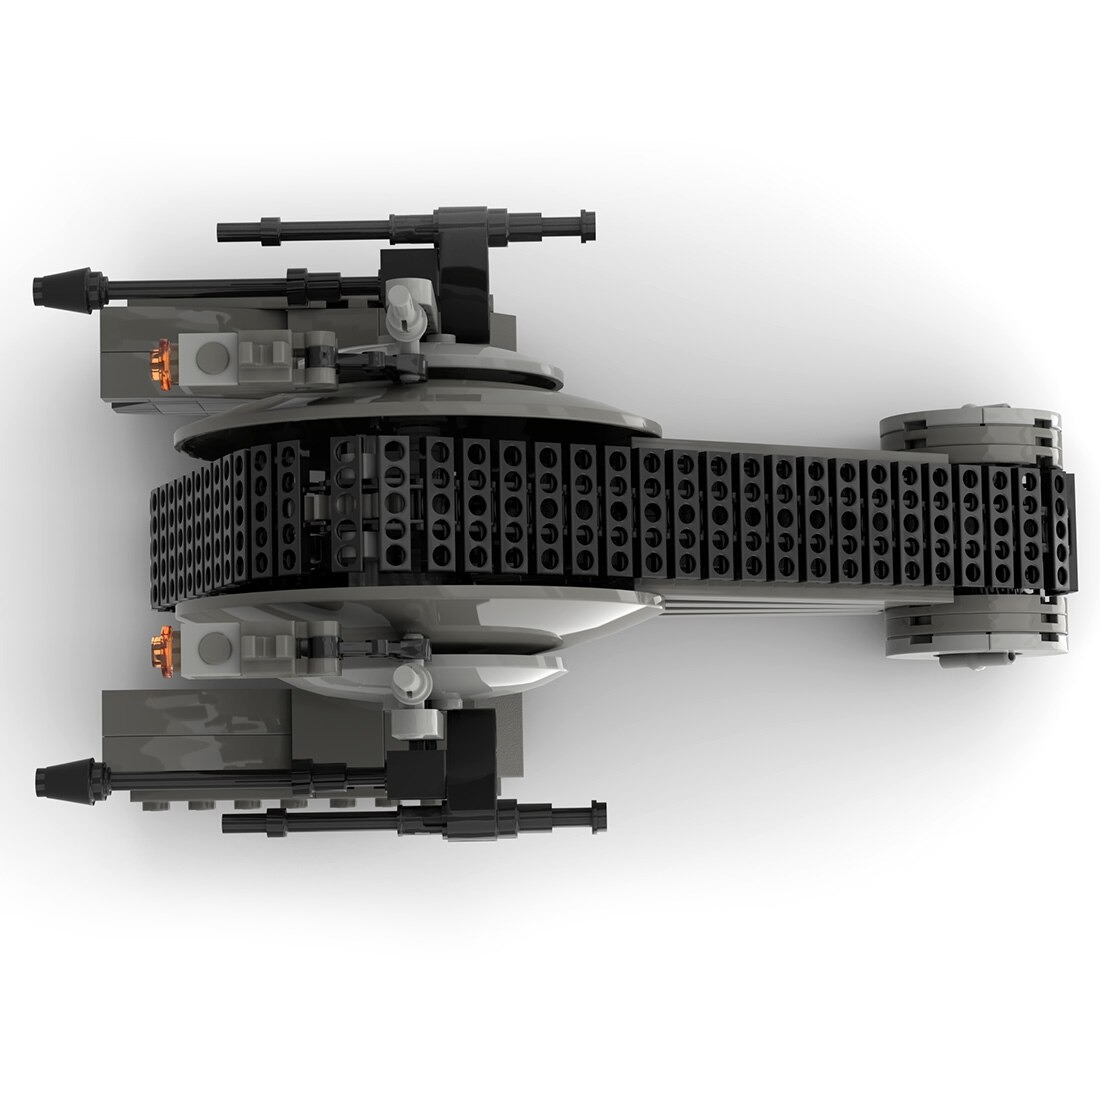 Separatist NR-N99 Droid Tank MOC-102664 Star Wars With 266PCS